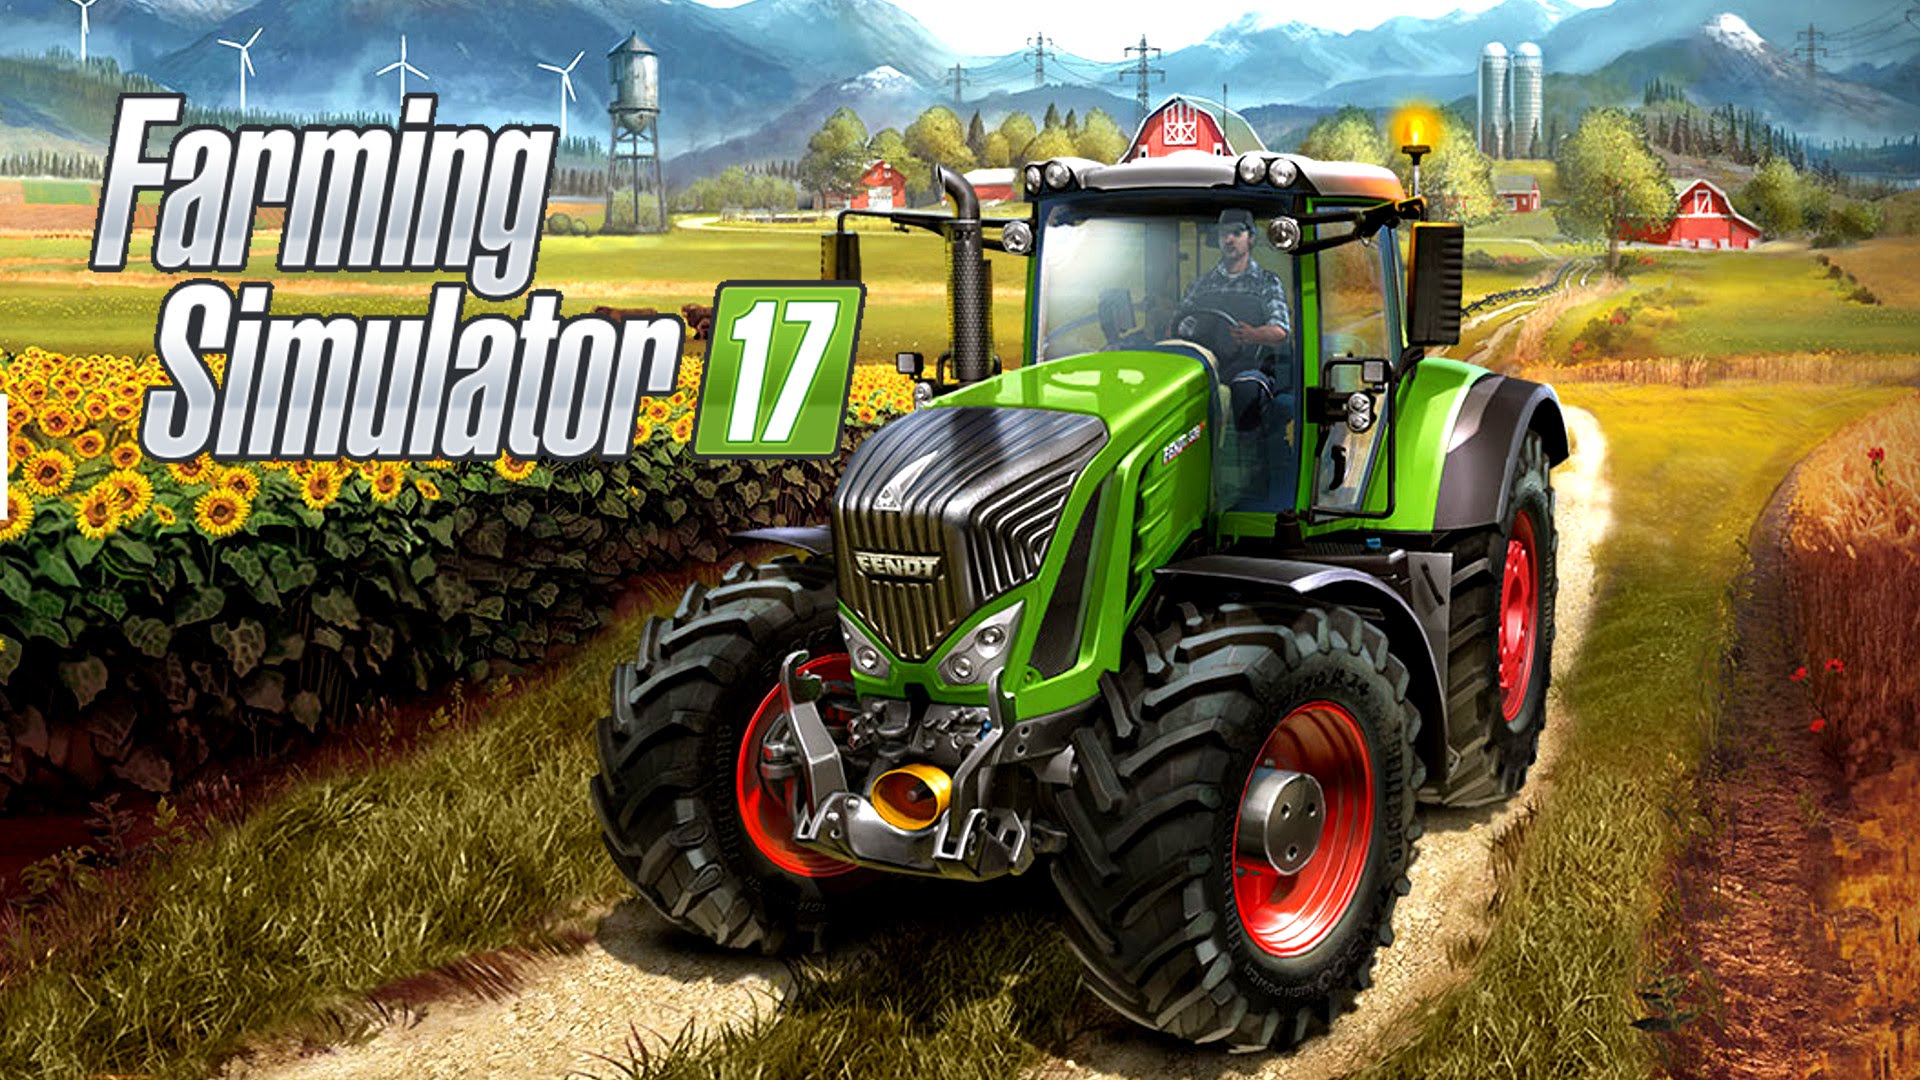 farming simulator 18